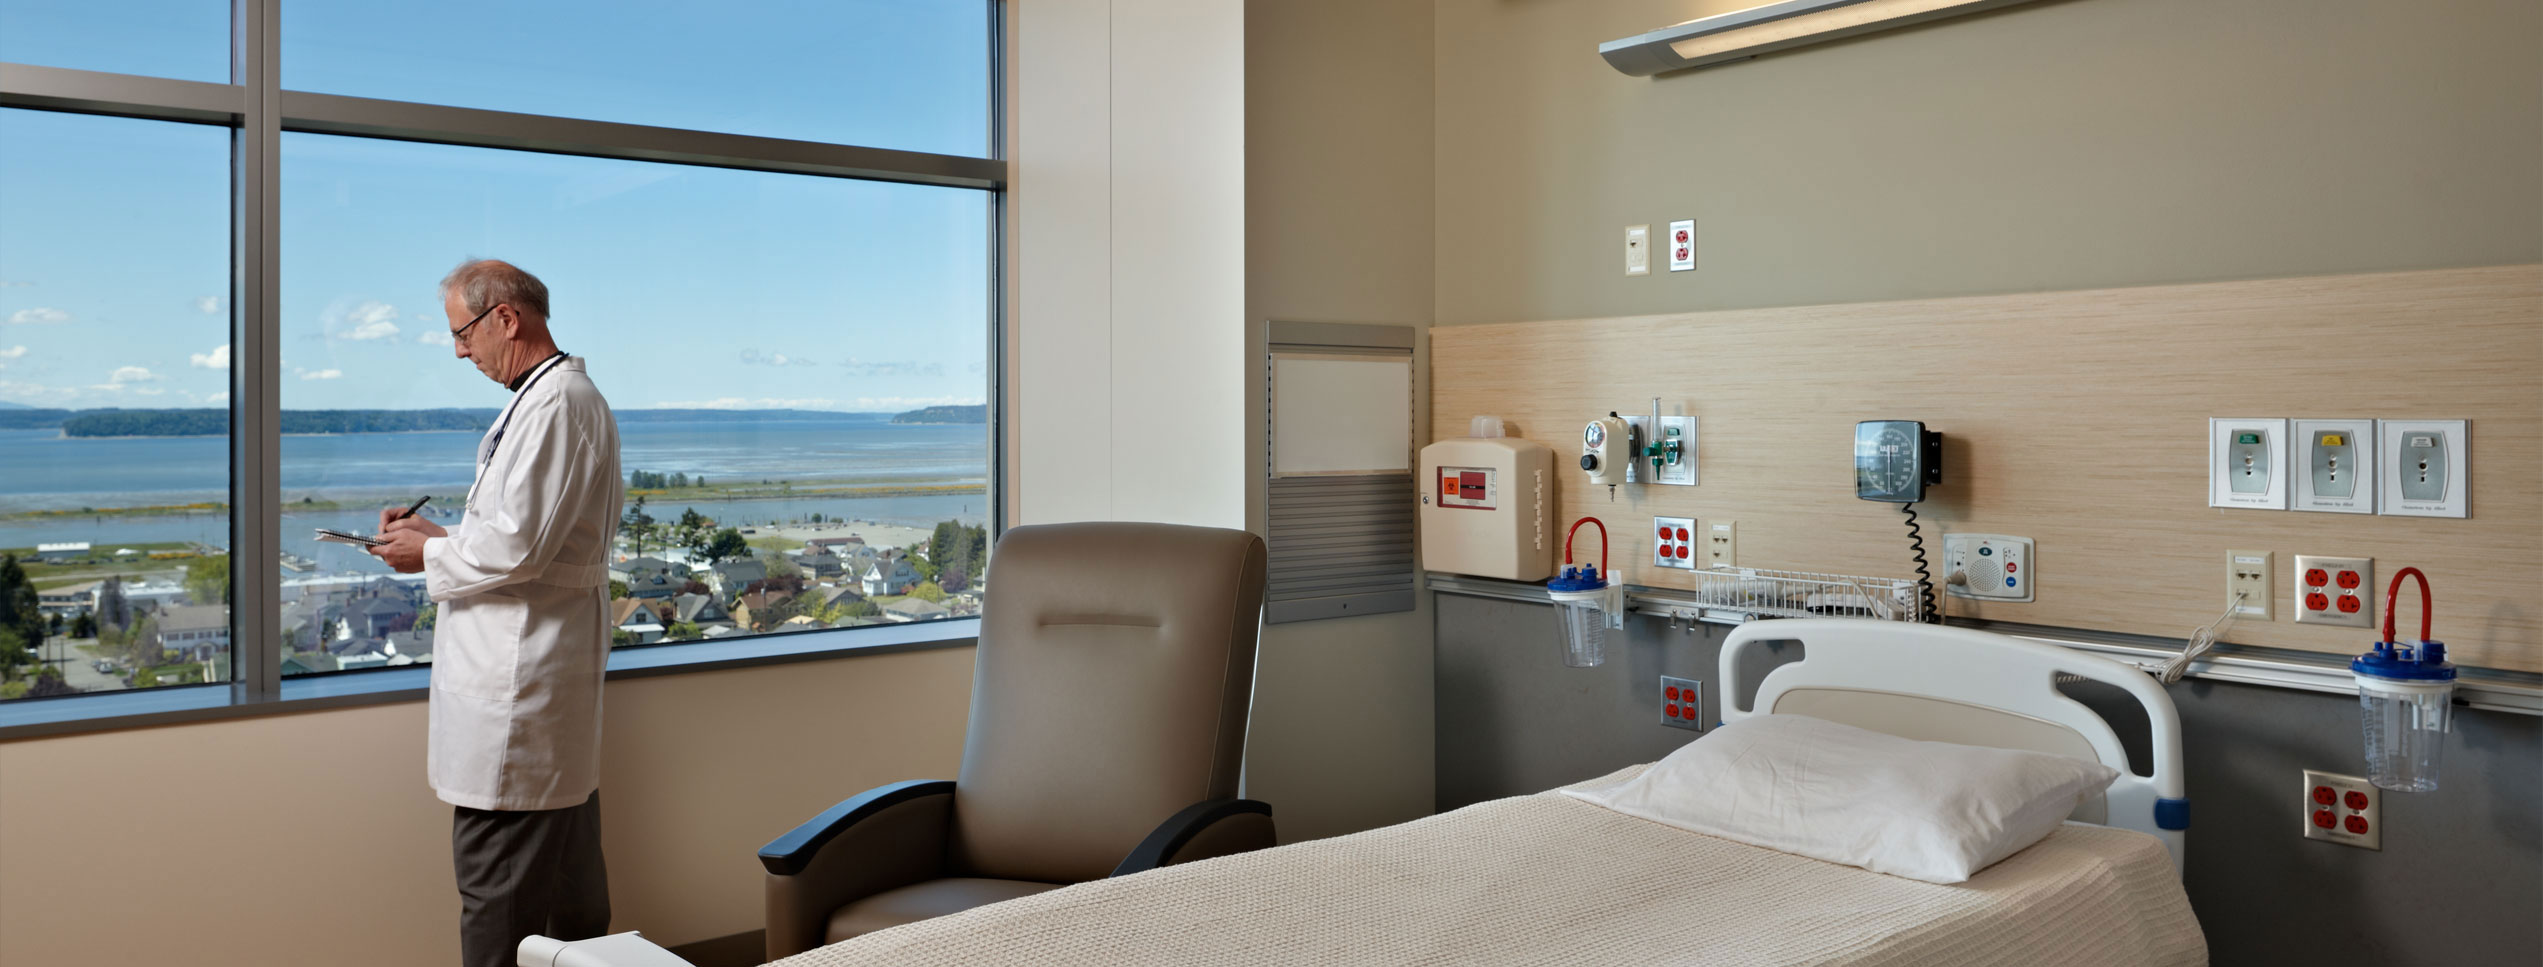 doctor in brand new hospital room at Providence Regional Medical Center in Everett